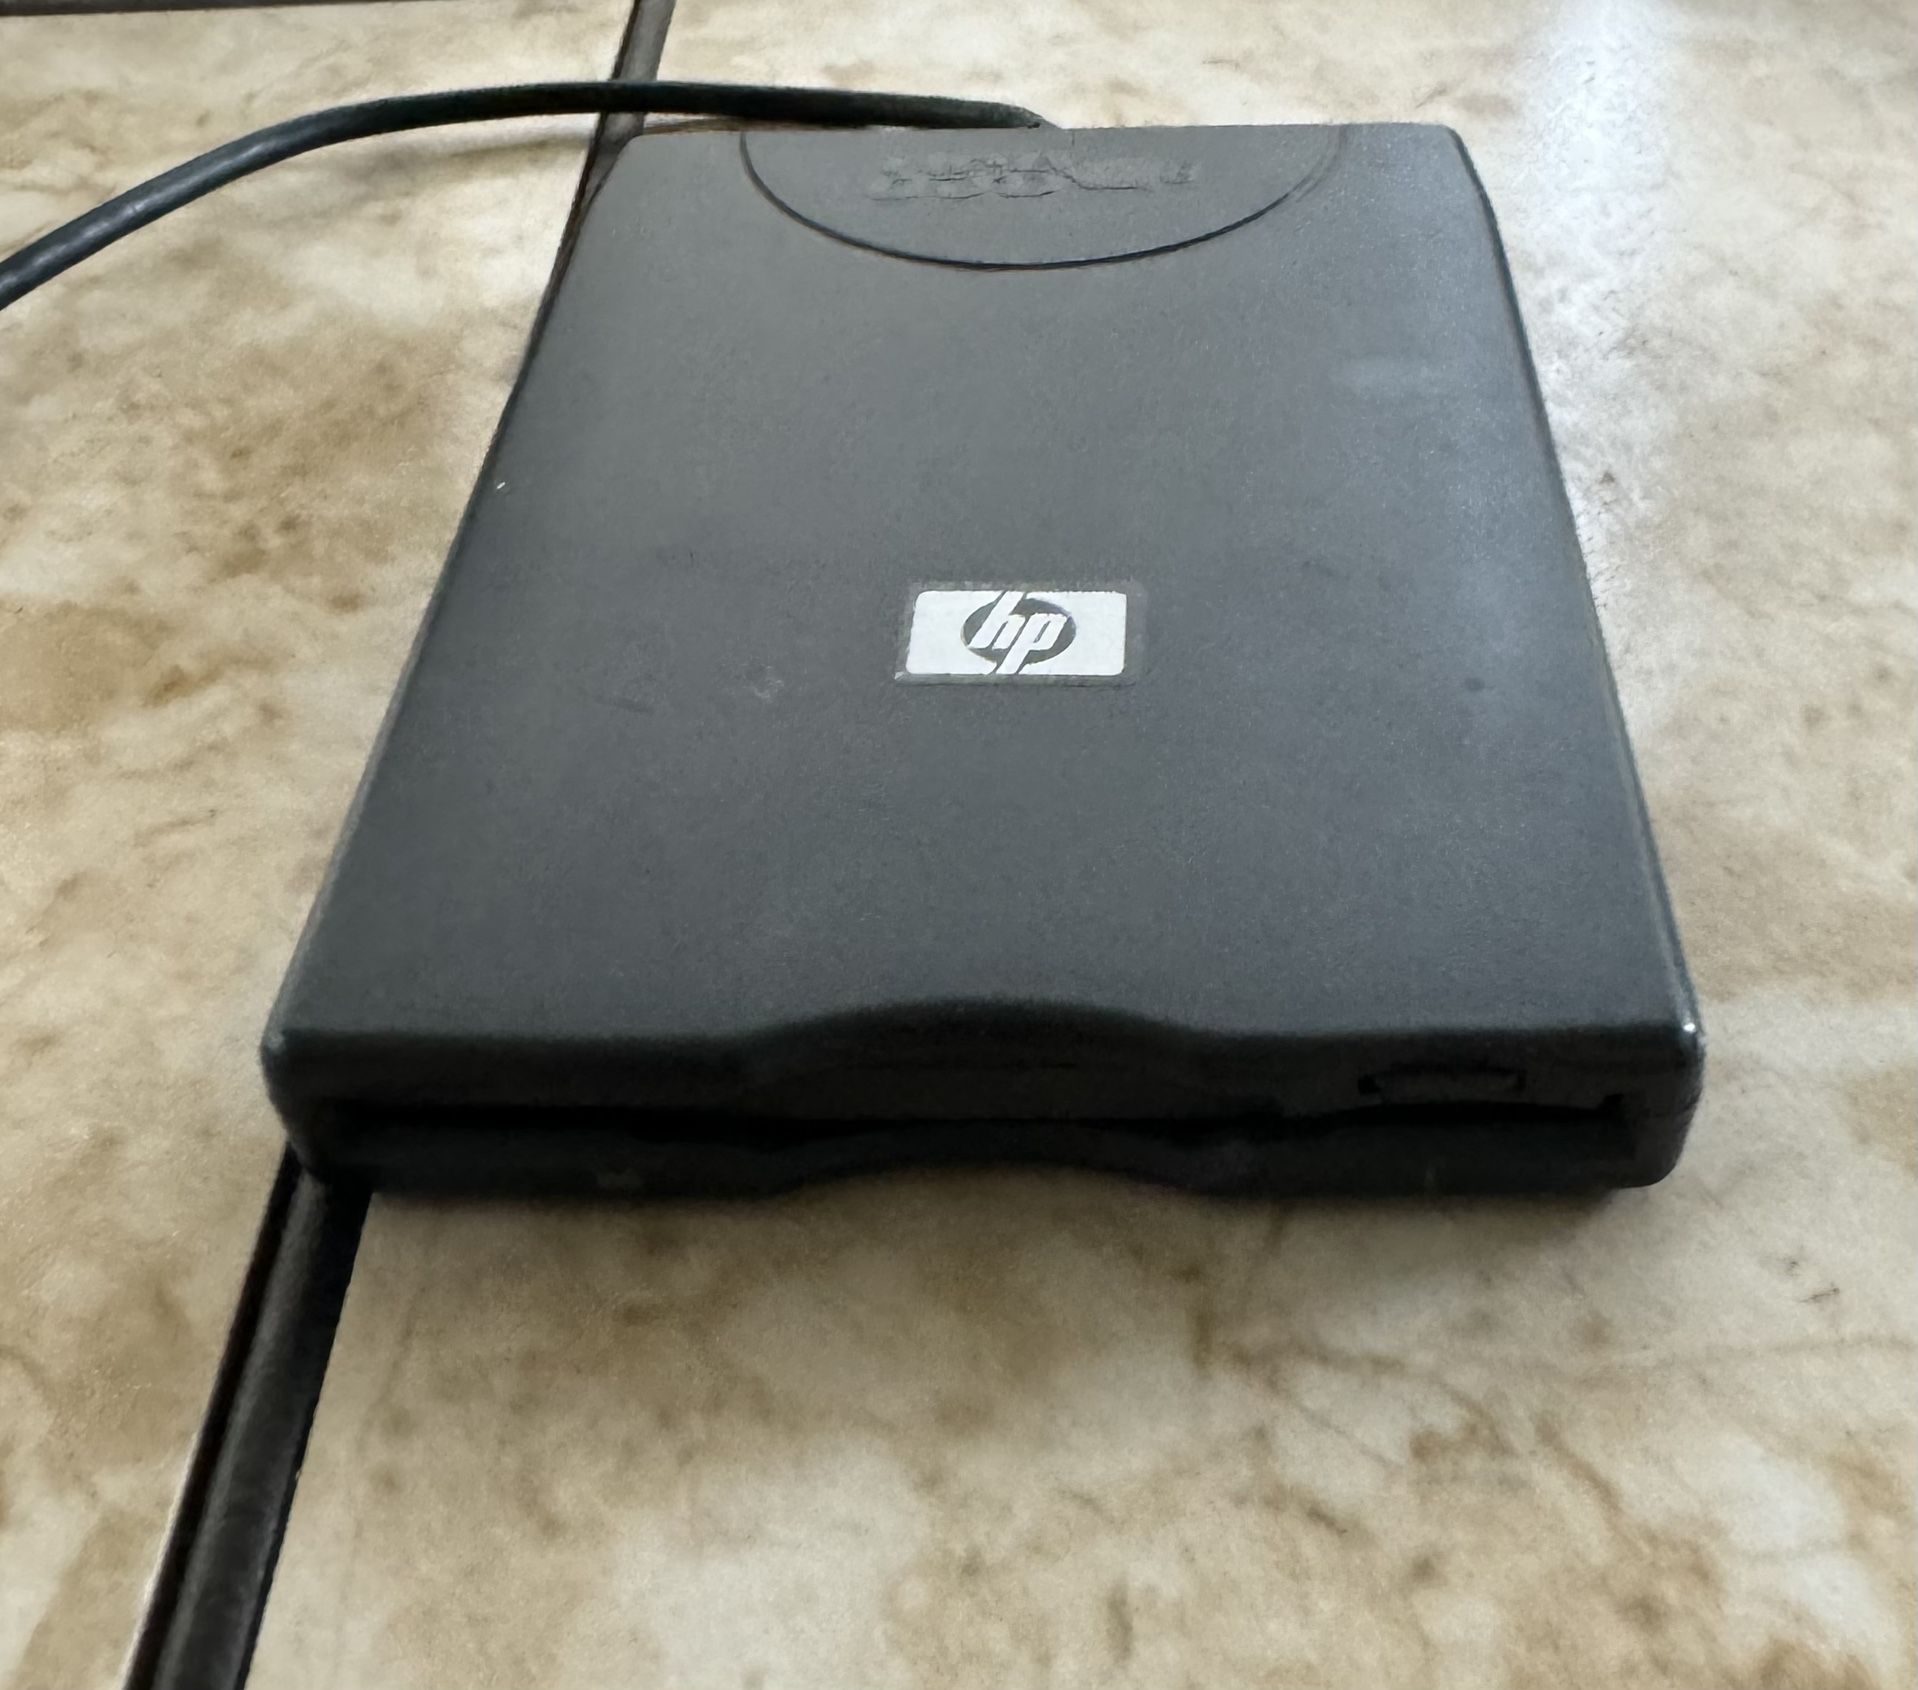 USB 3 1/2” Disk Drive